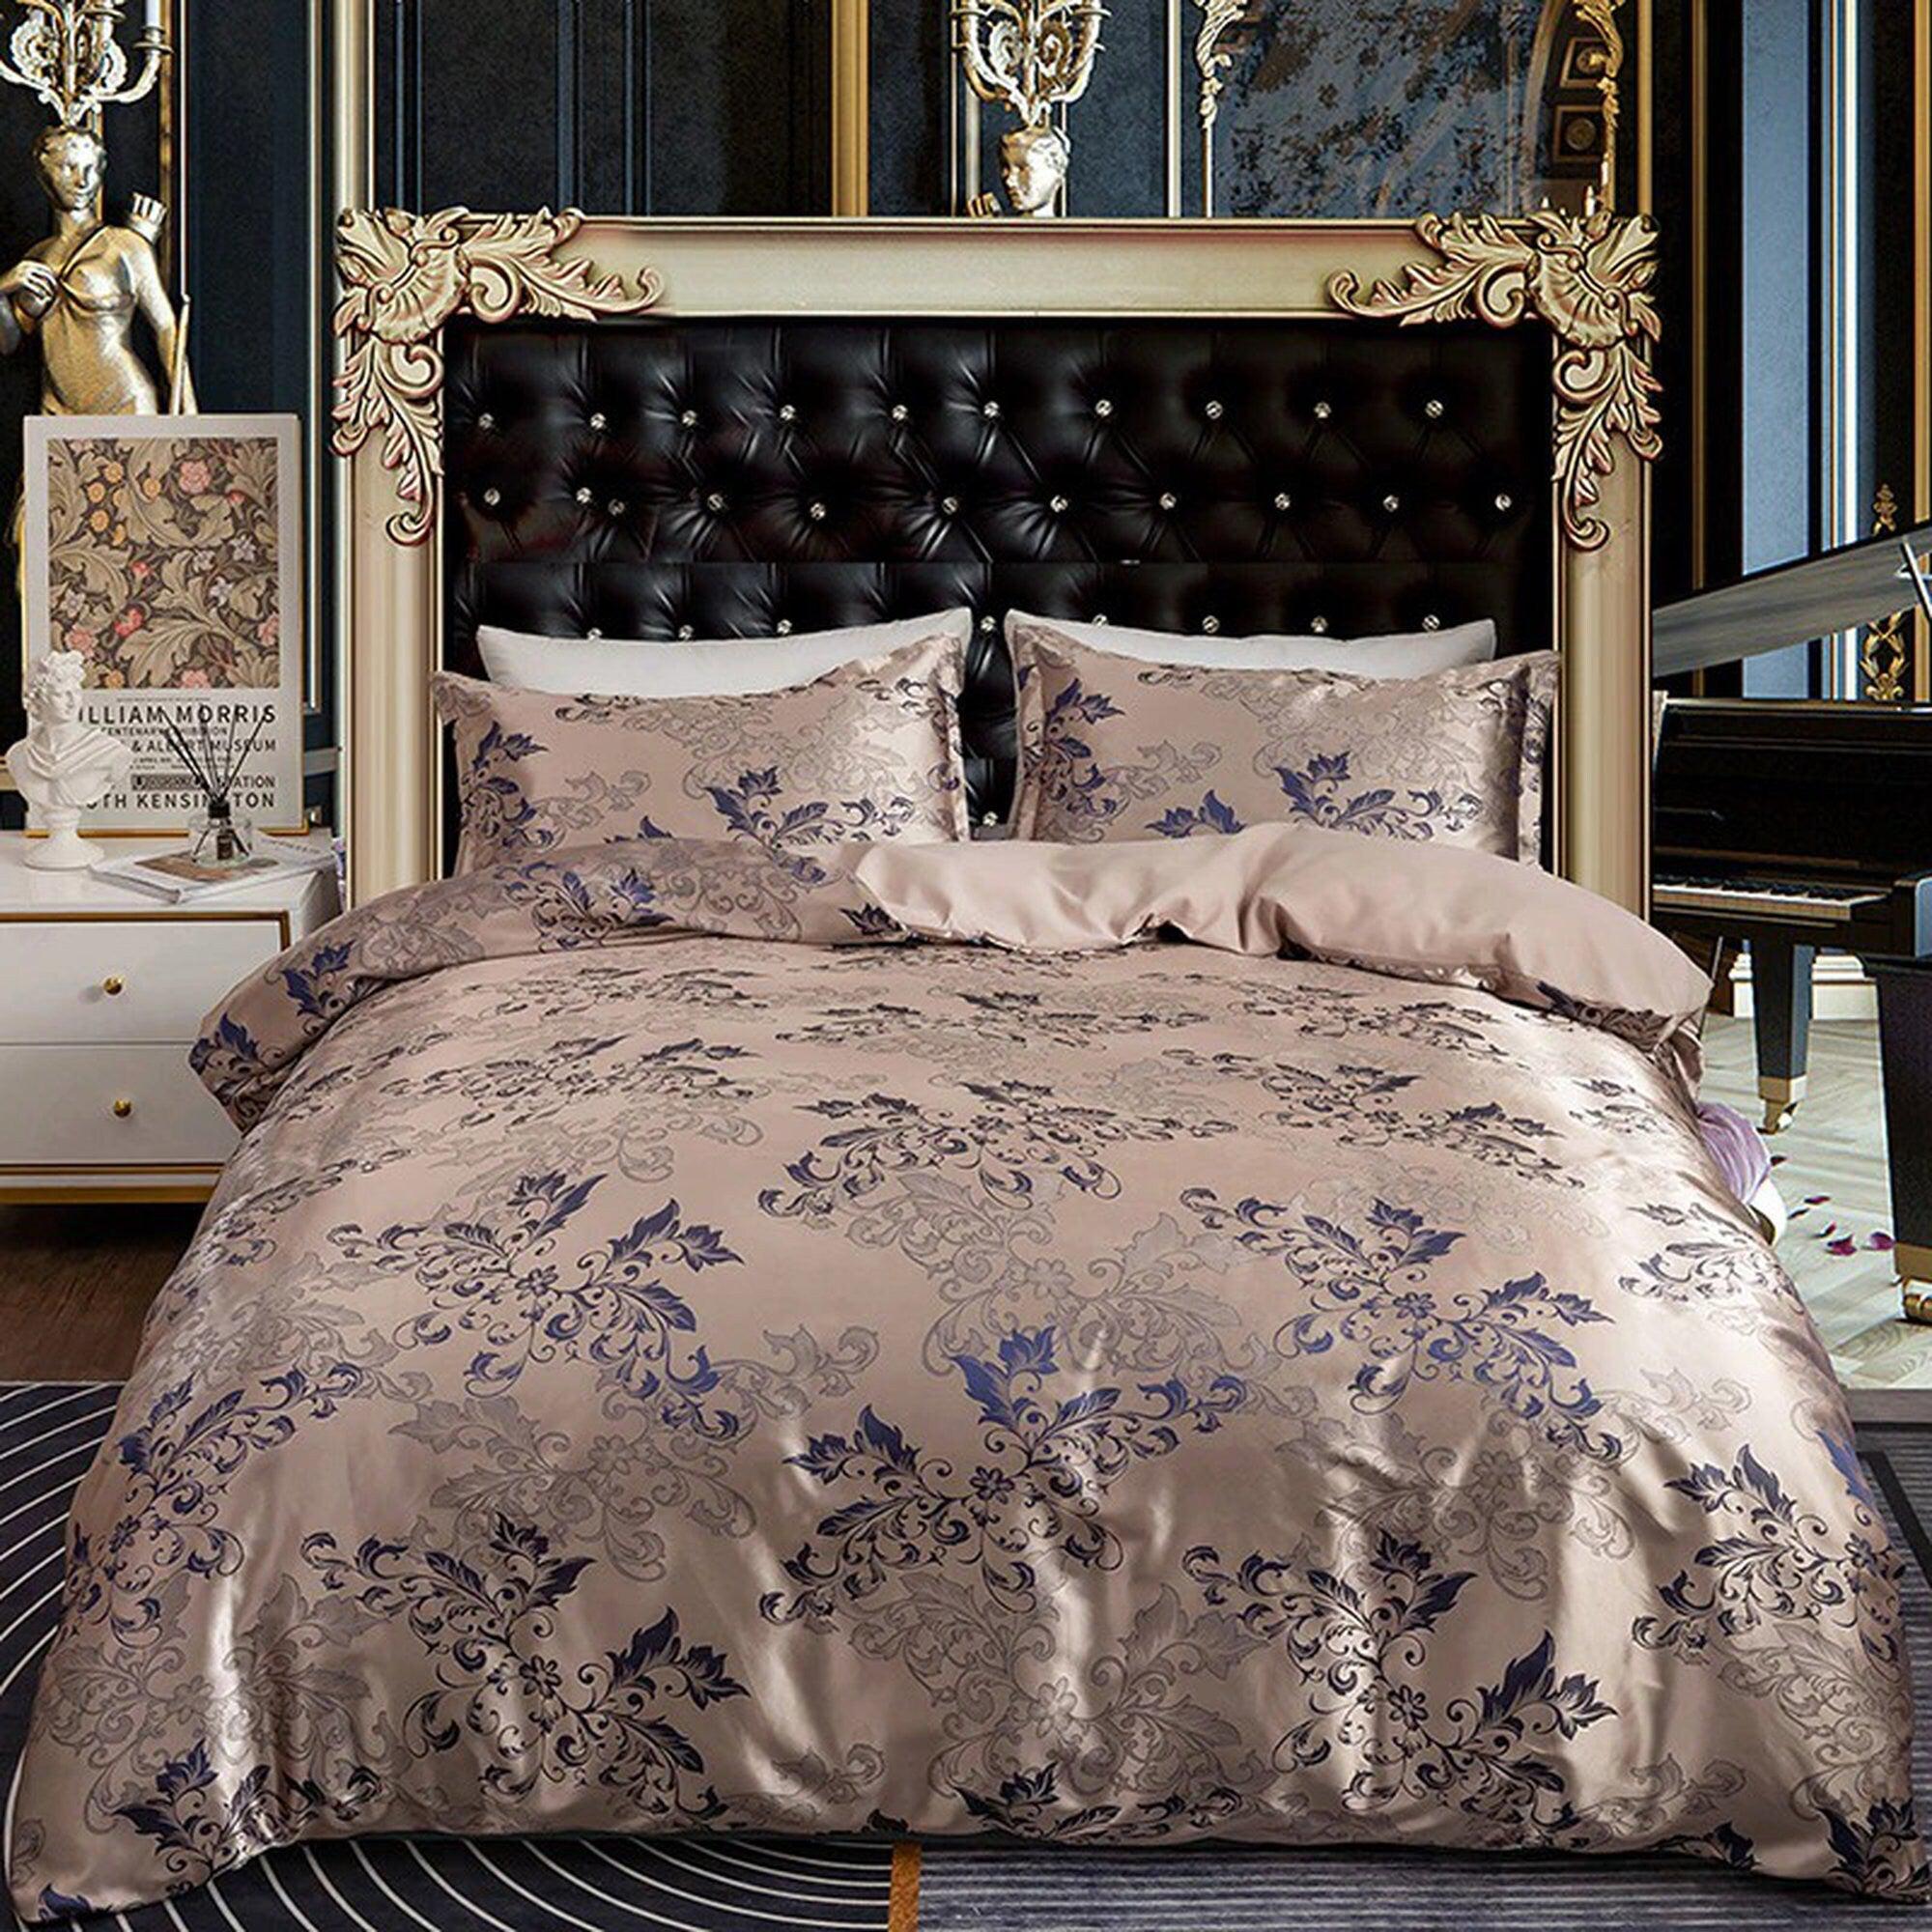 daintyduvet Luxury Bedding in Rose Gold Jacquard Fabric Blue Embroidery, Damask Duvet Cover Set, Designer Bedding, Aesthetic Duvet King Queen Full Twin